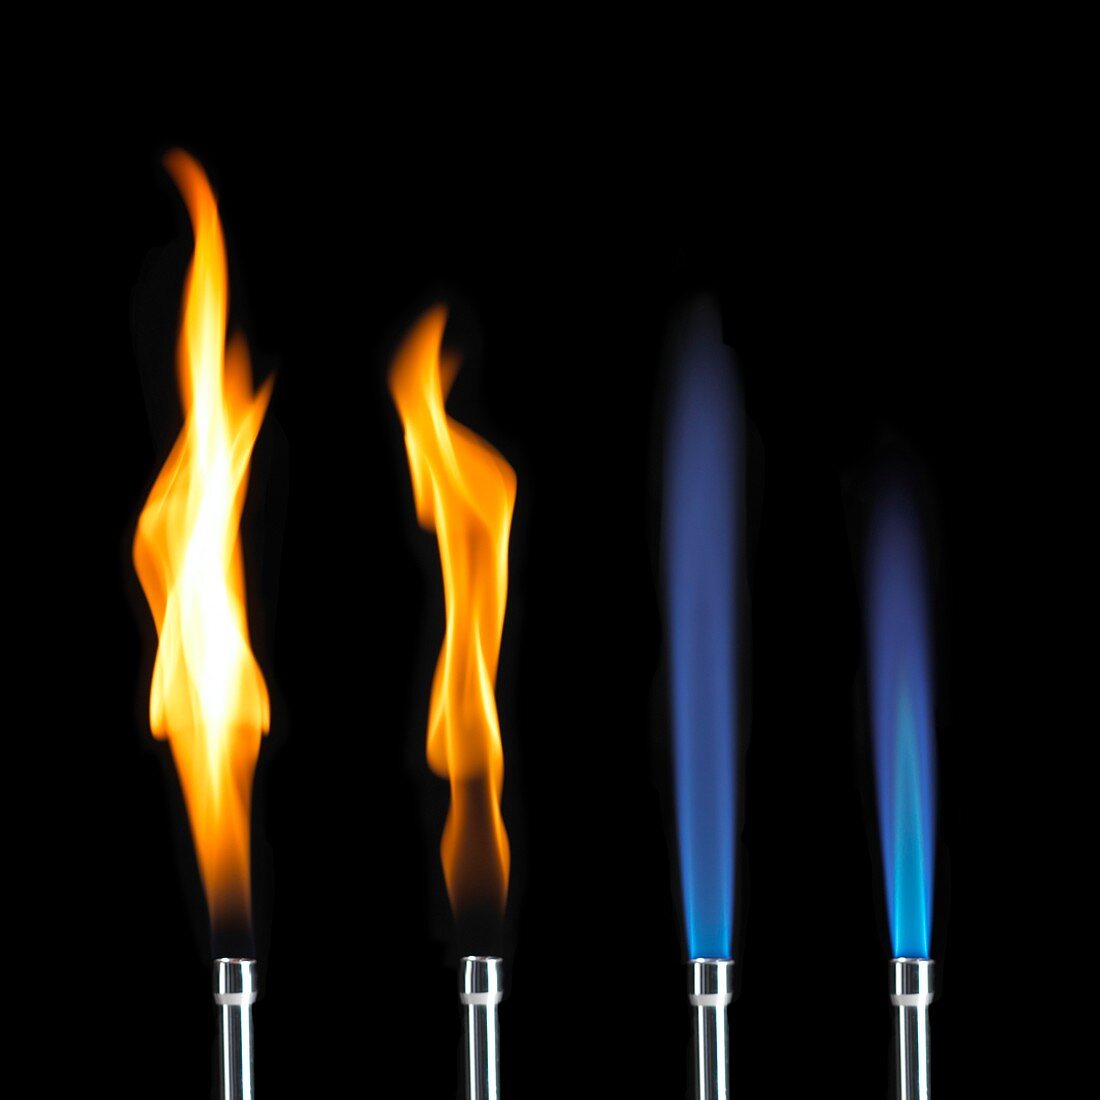 Bunsen burner flame sequence